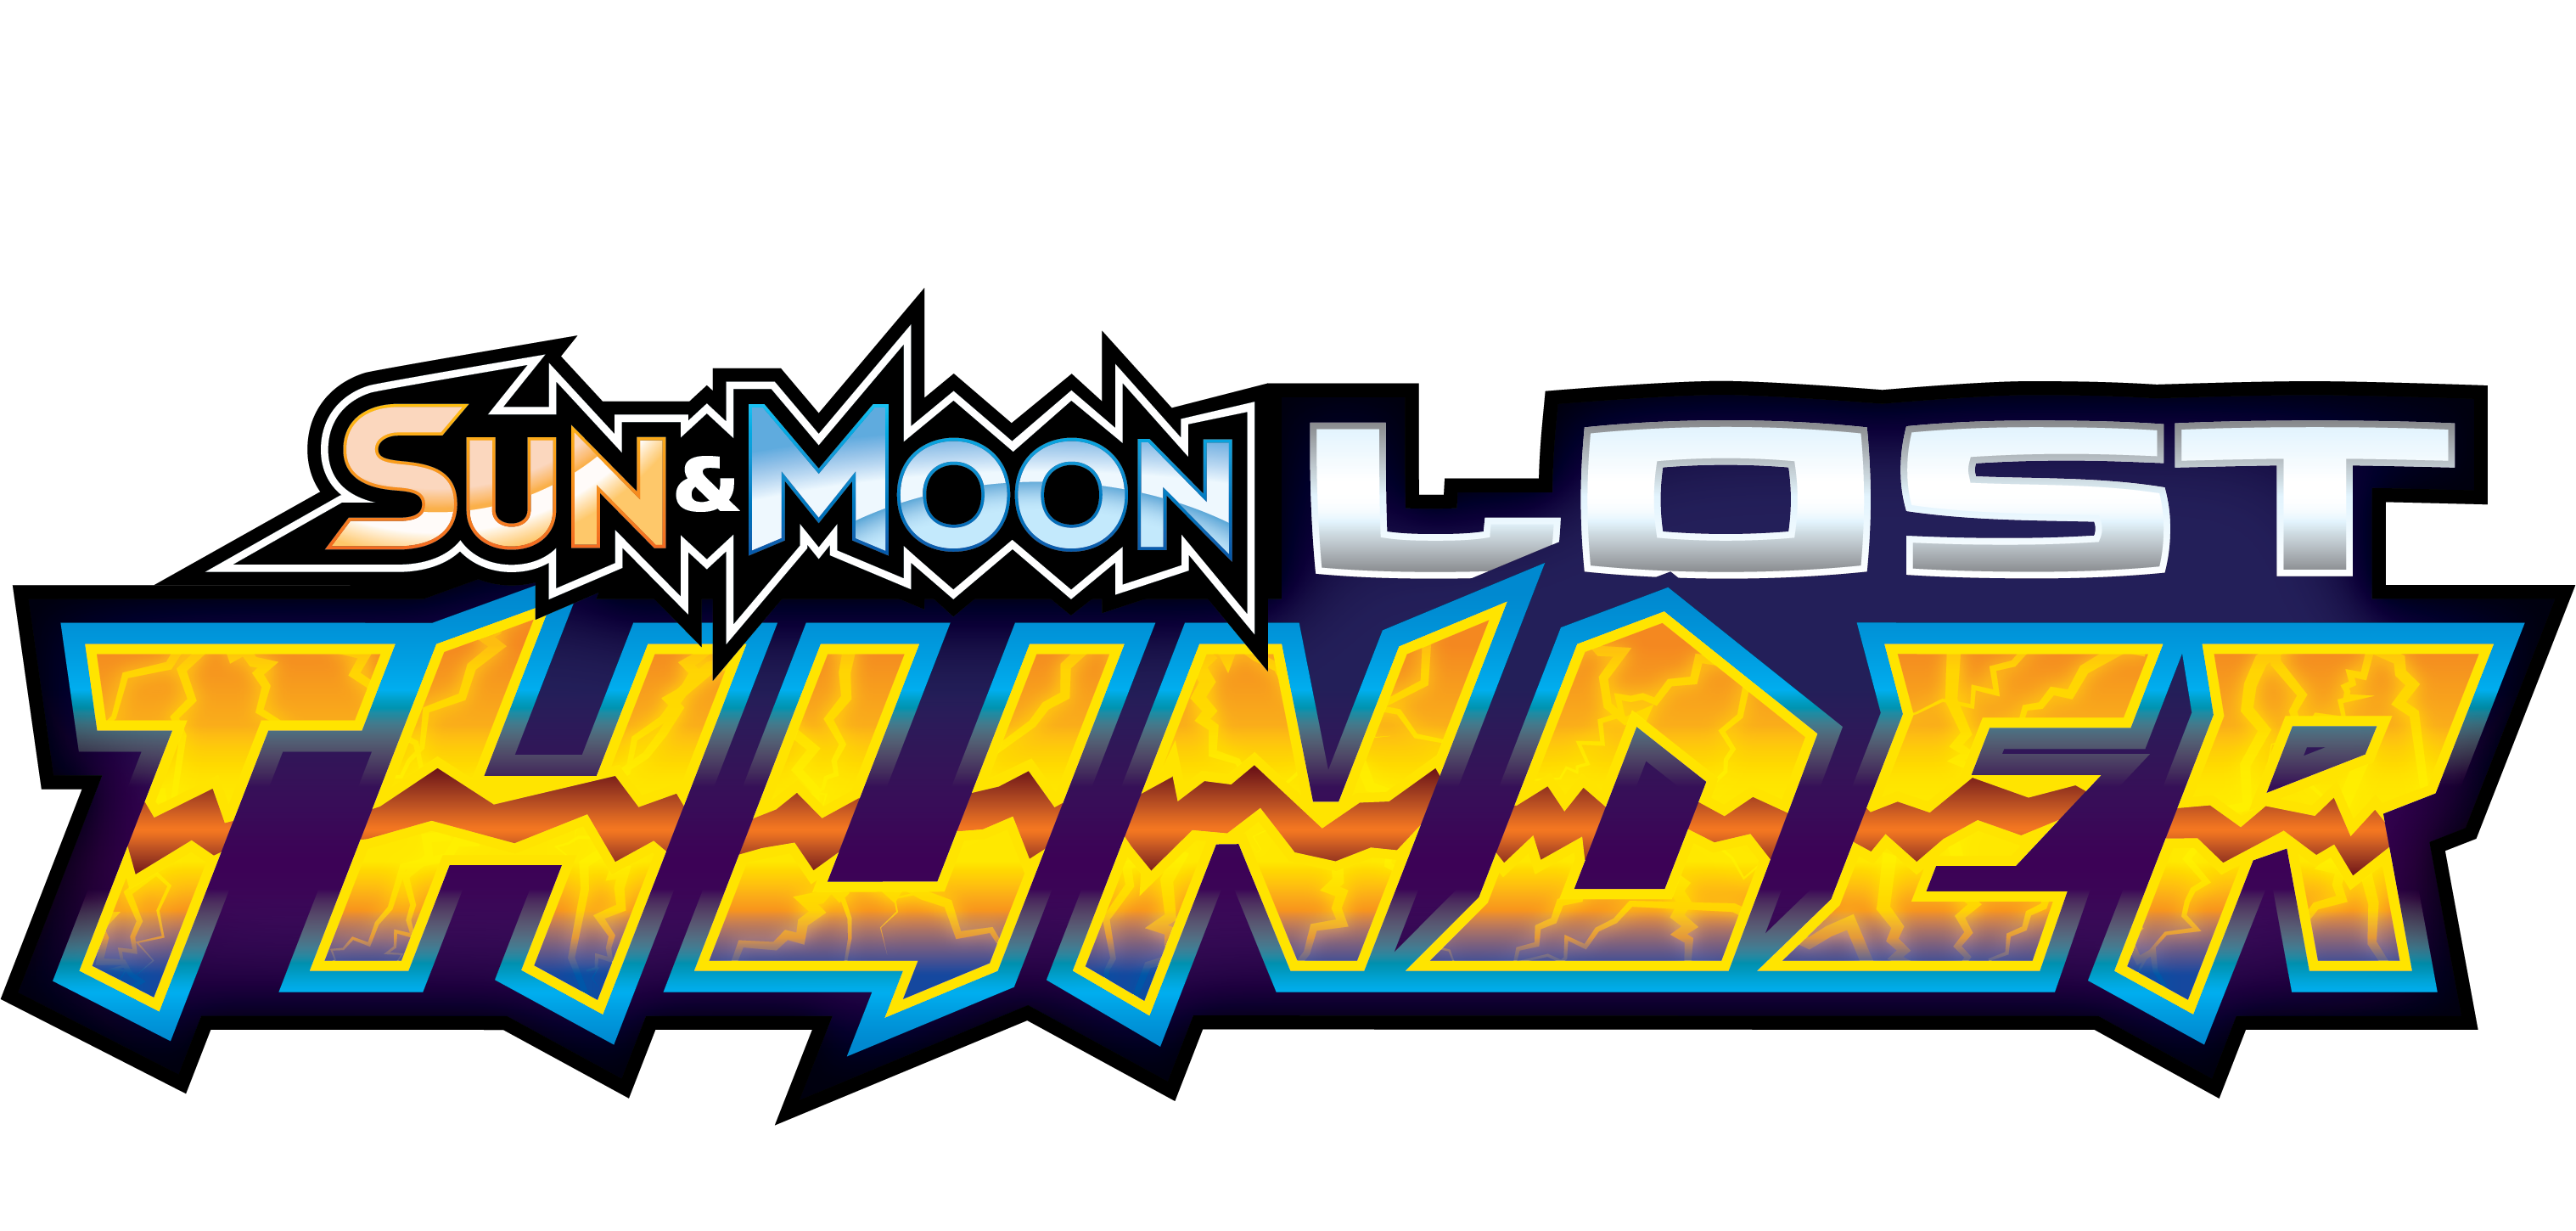 Pokemon Tcg Sun Moon Lost Thunder Expansion Arrives Nov 2nd 18 The Gonintendo Archives Gonintendo